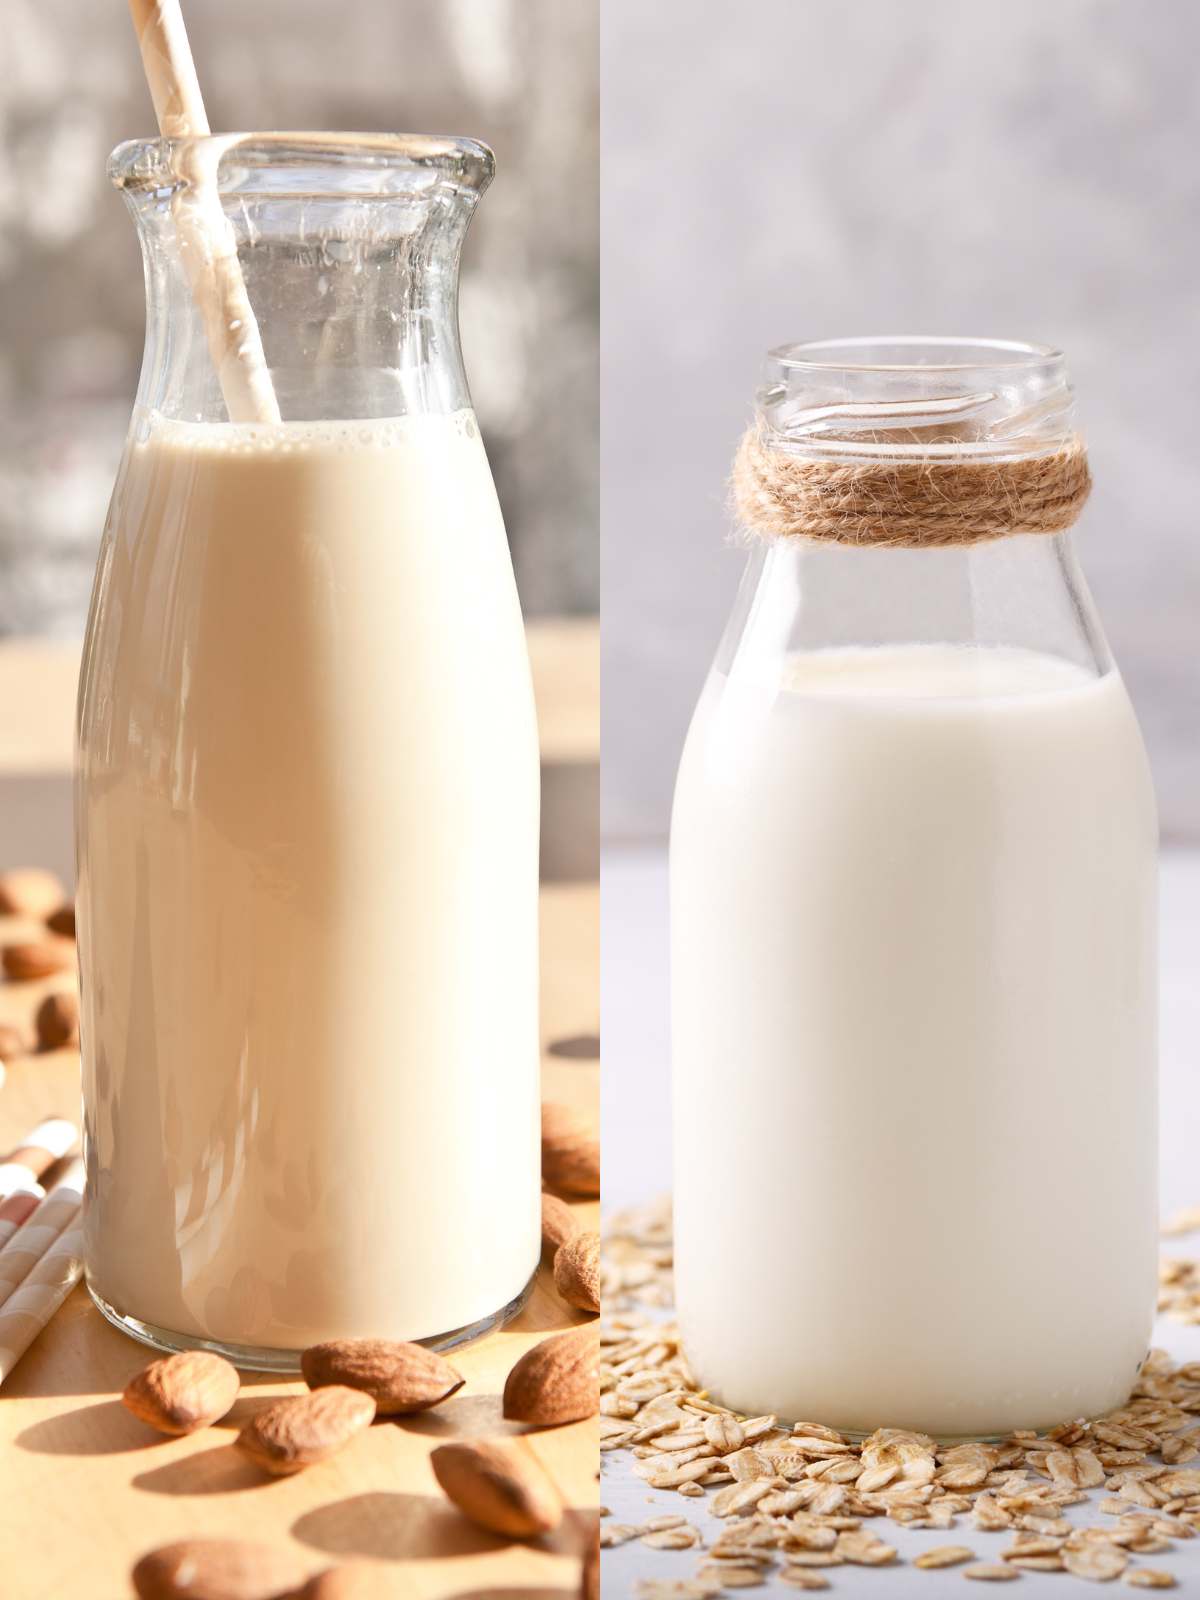 Oat Milk vs. Almond Milk